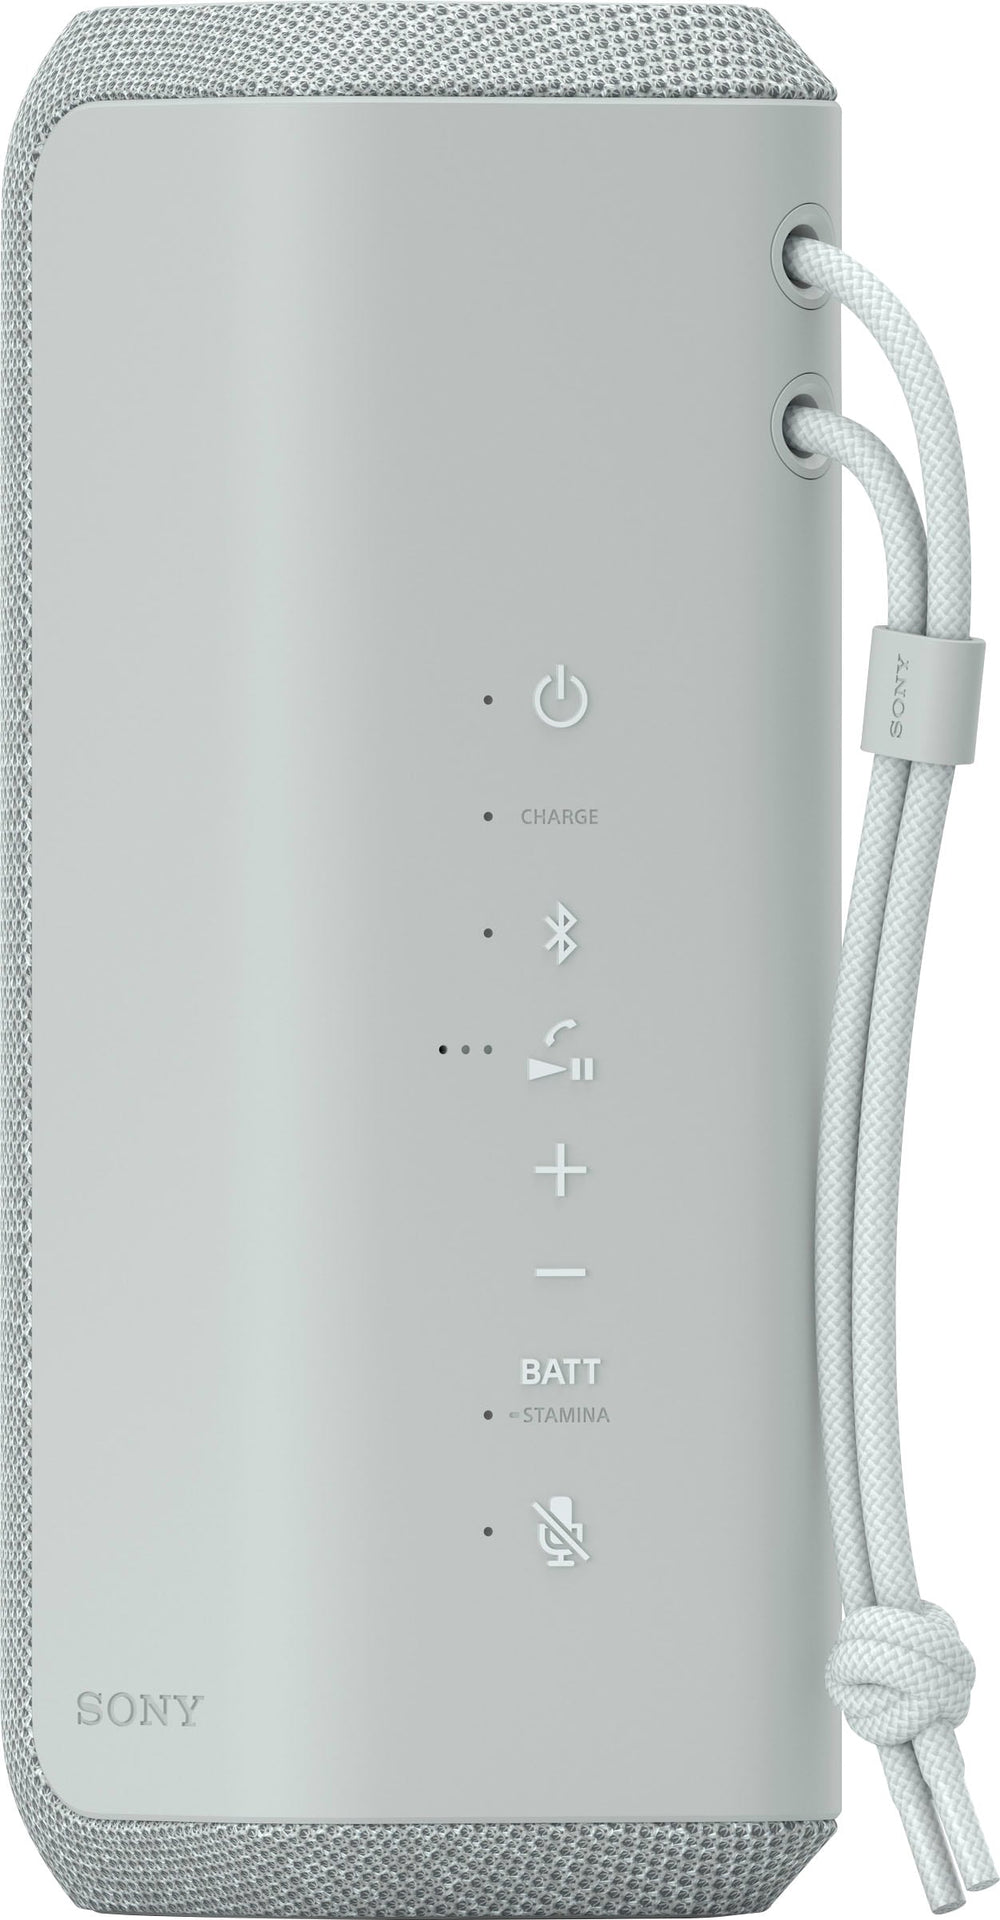 Sony - SRSXE200 Portable X-Series Bluetooth Speaker - Light Gray_1